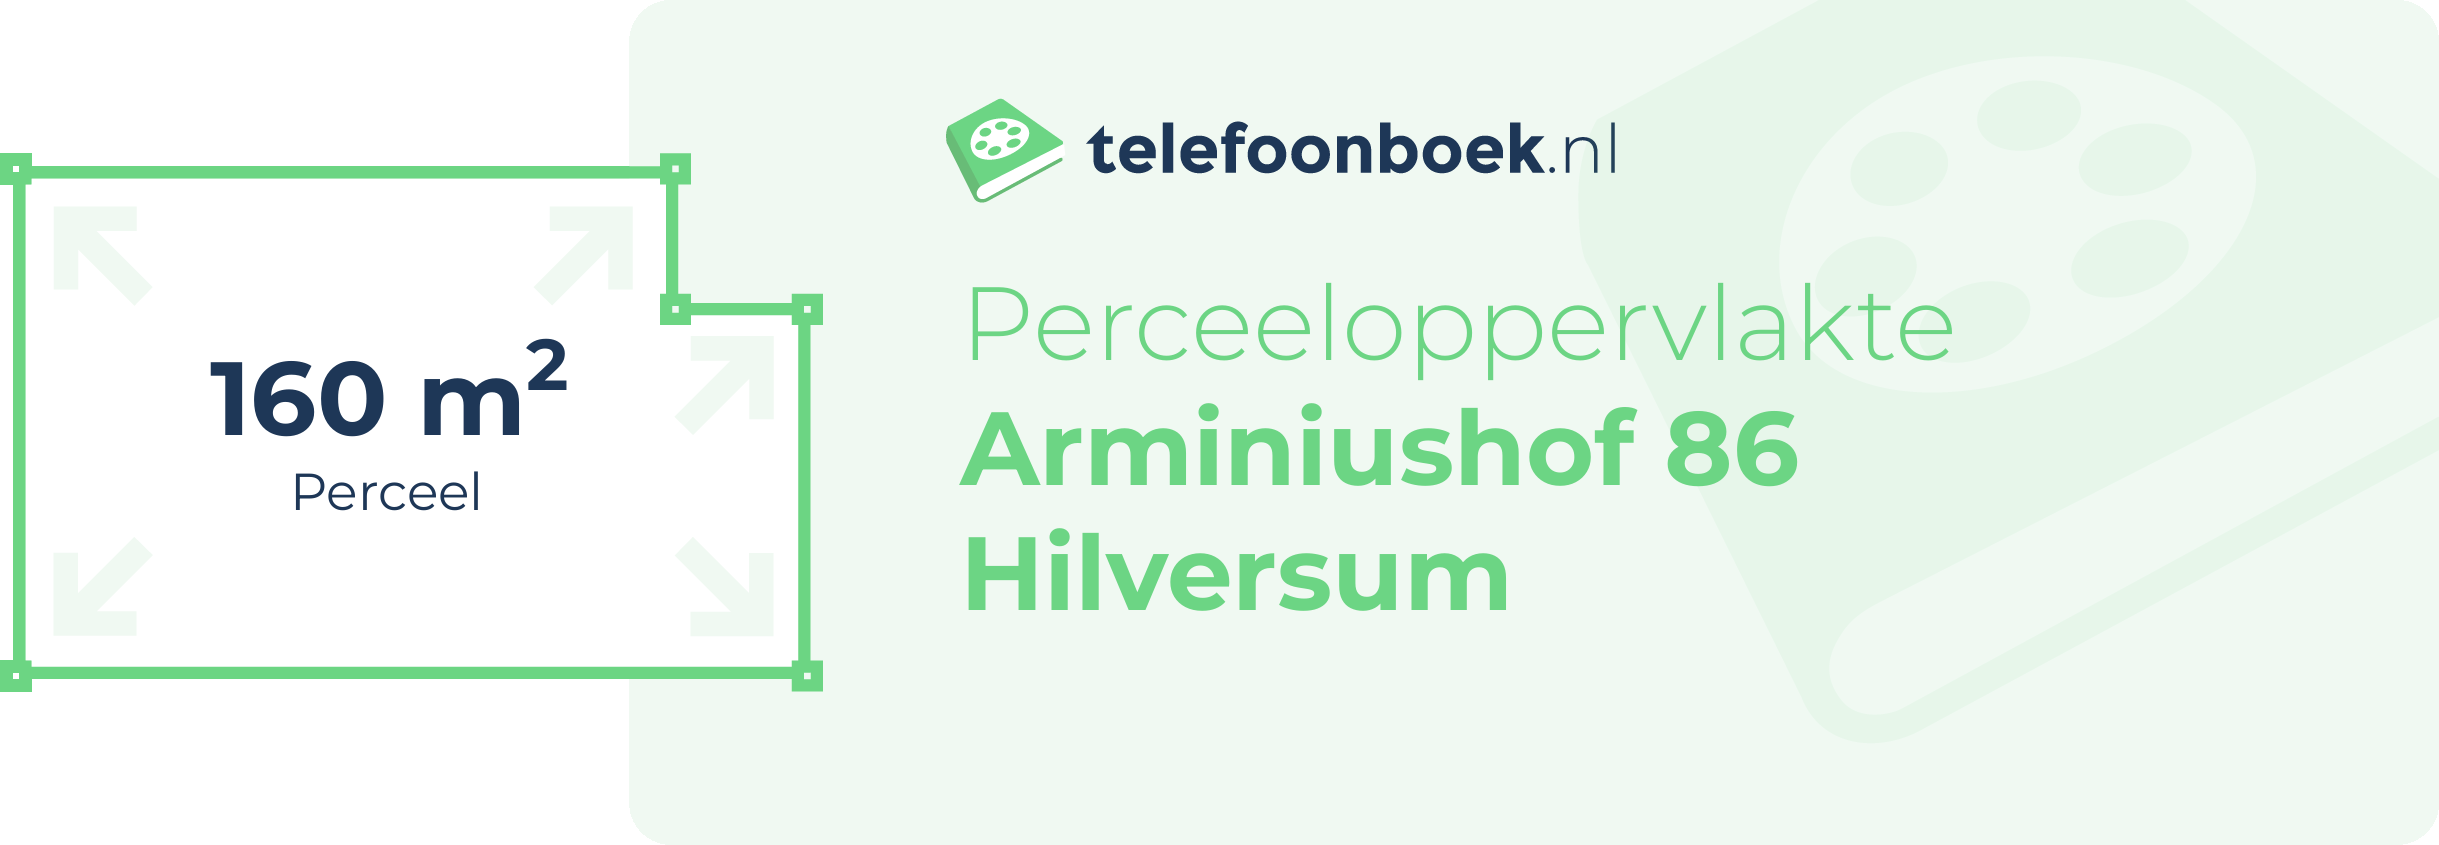 Perceeloppervlakte Arminiushof 86 Hilversum